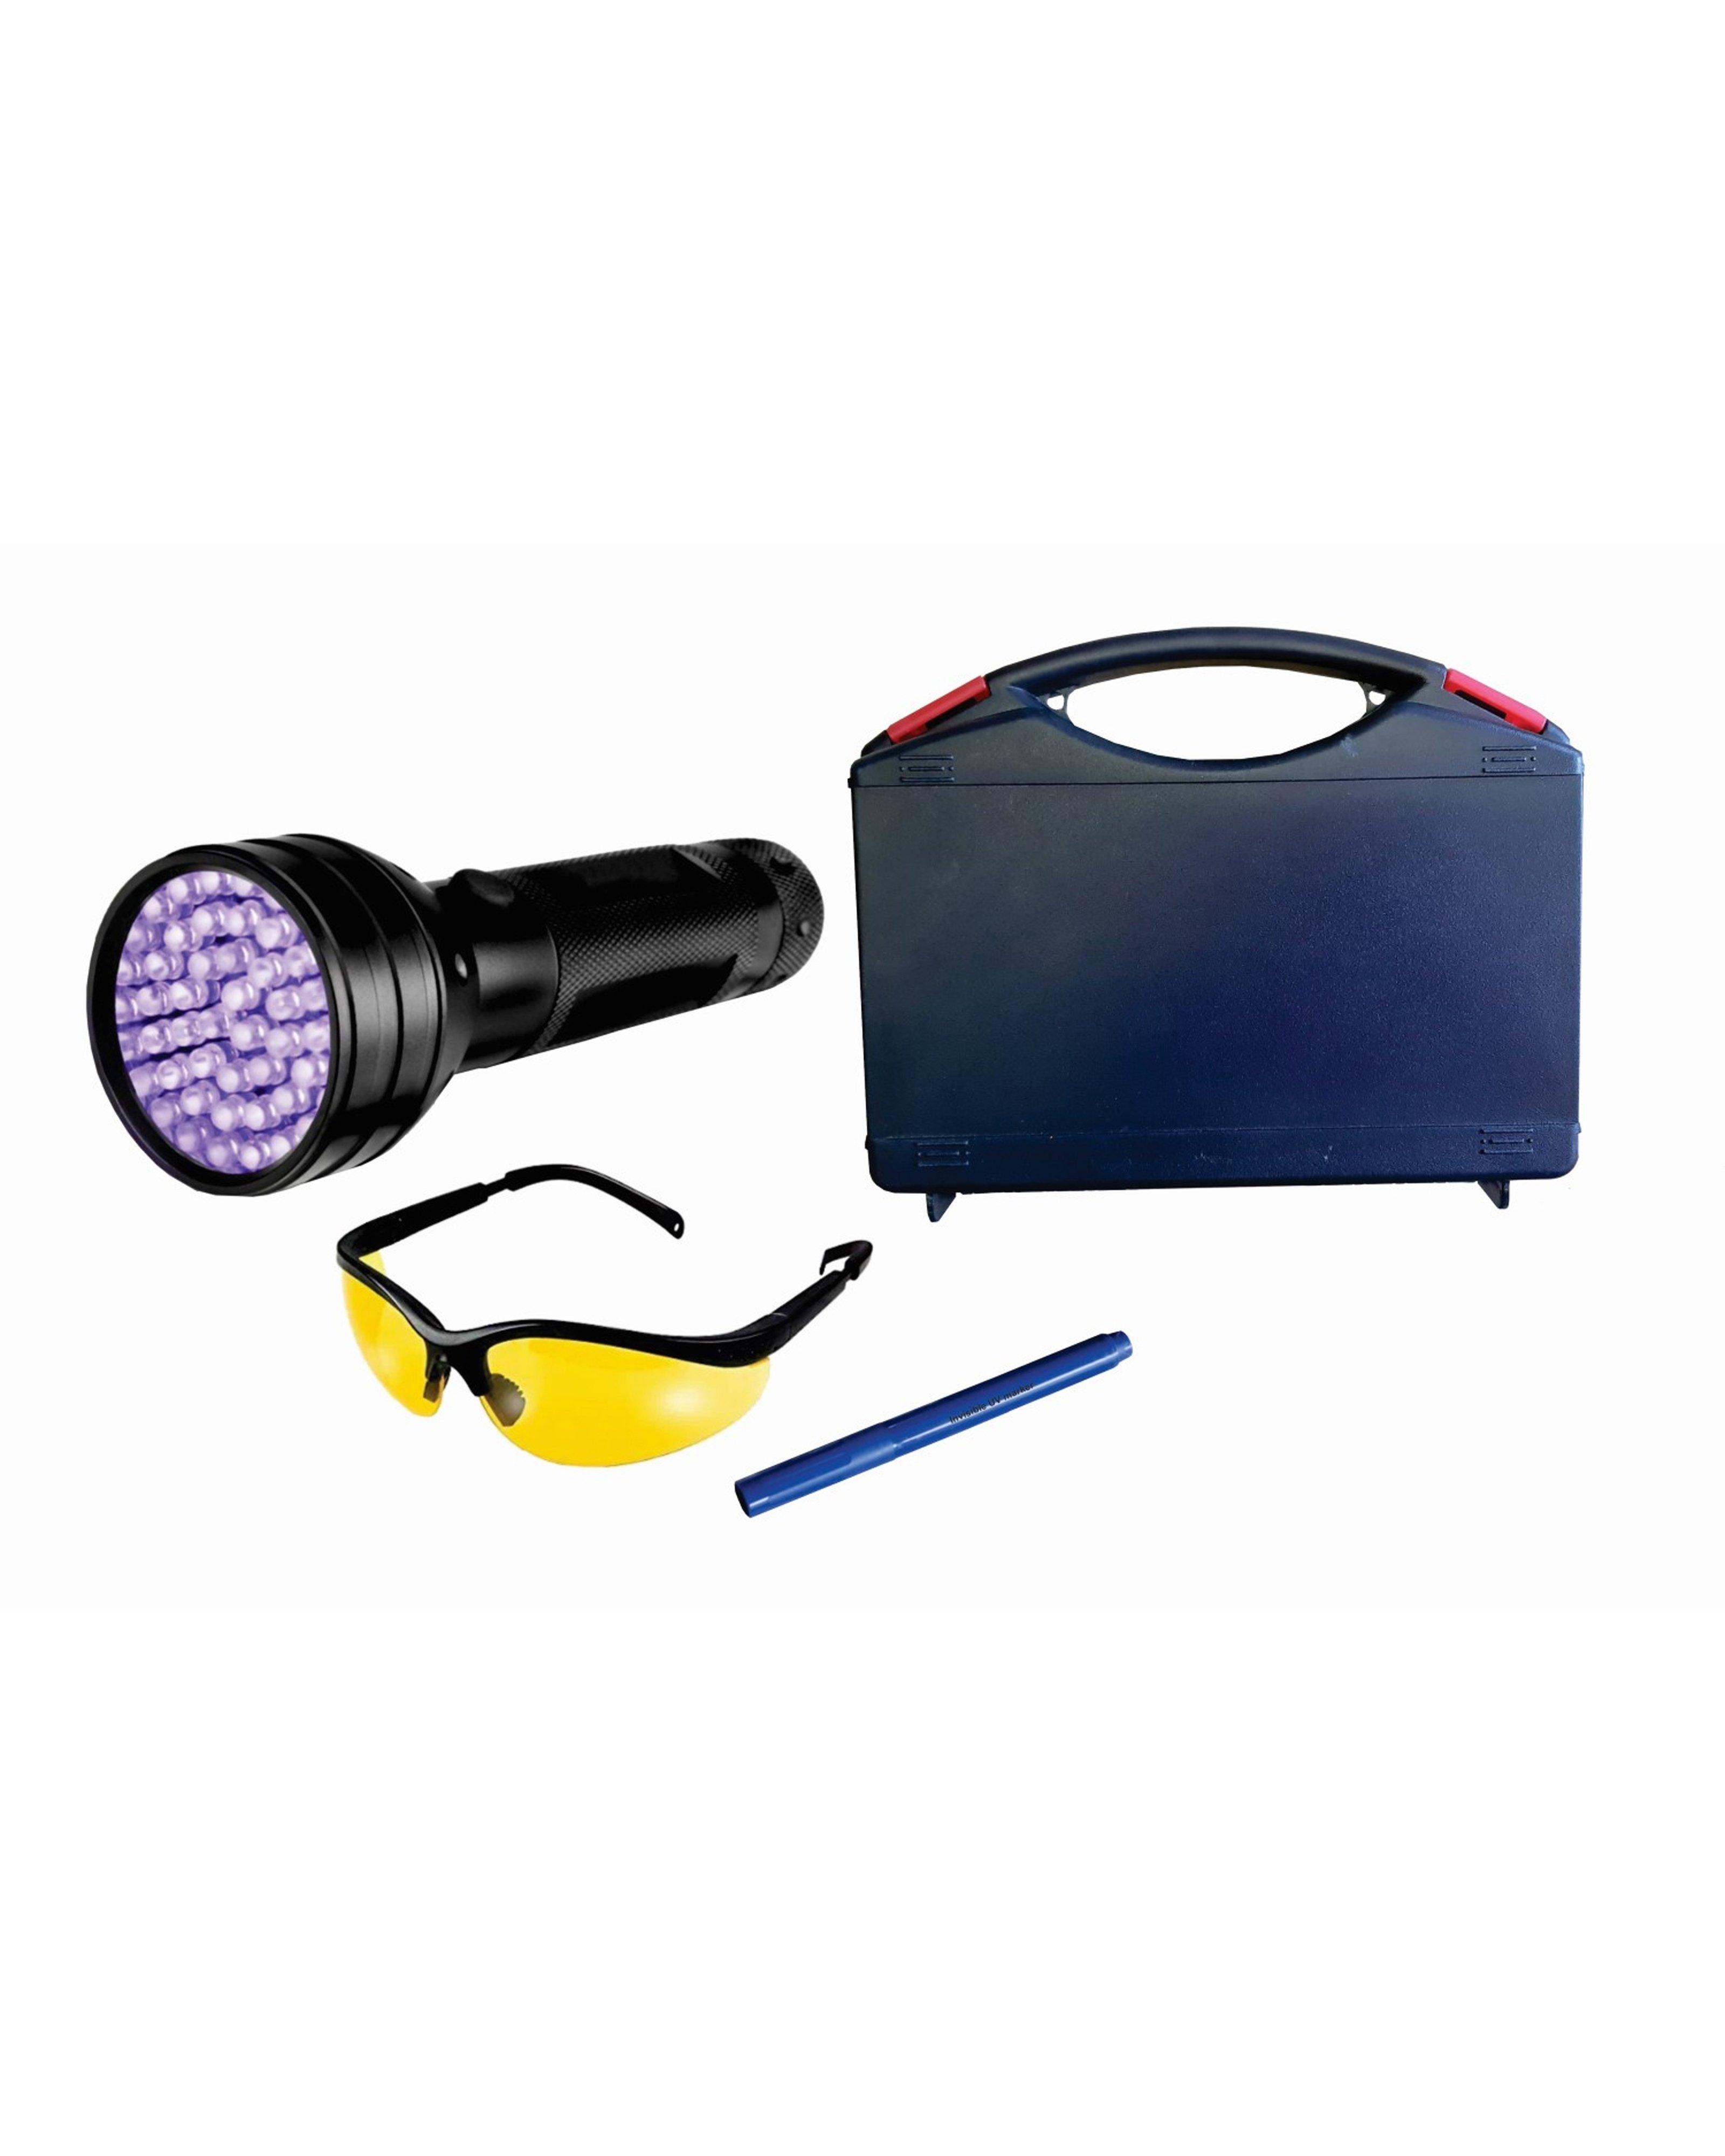 SupaLED Detector 51 LED Scorpion & Forensic Kit -  Black